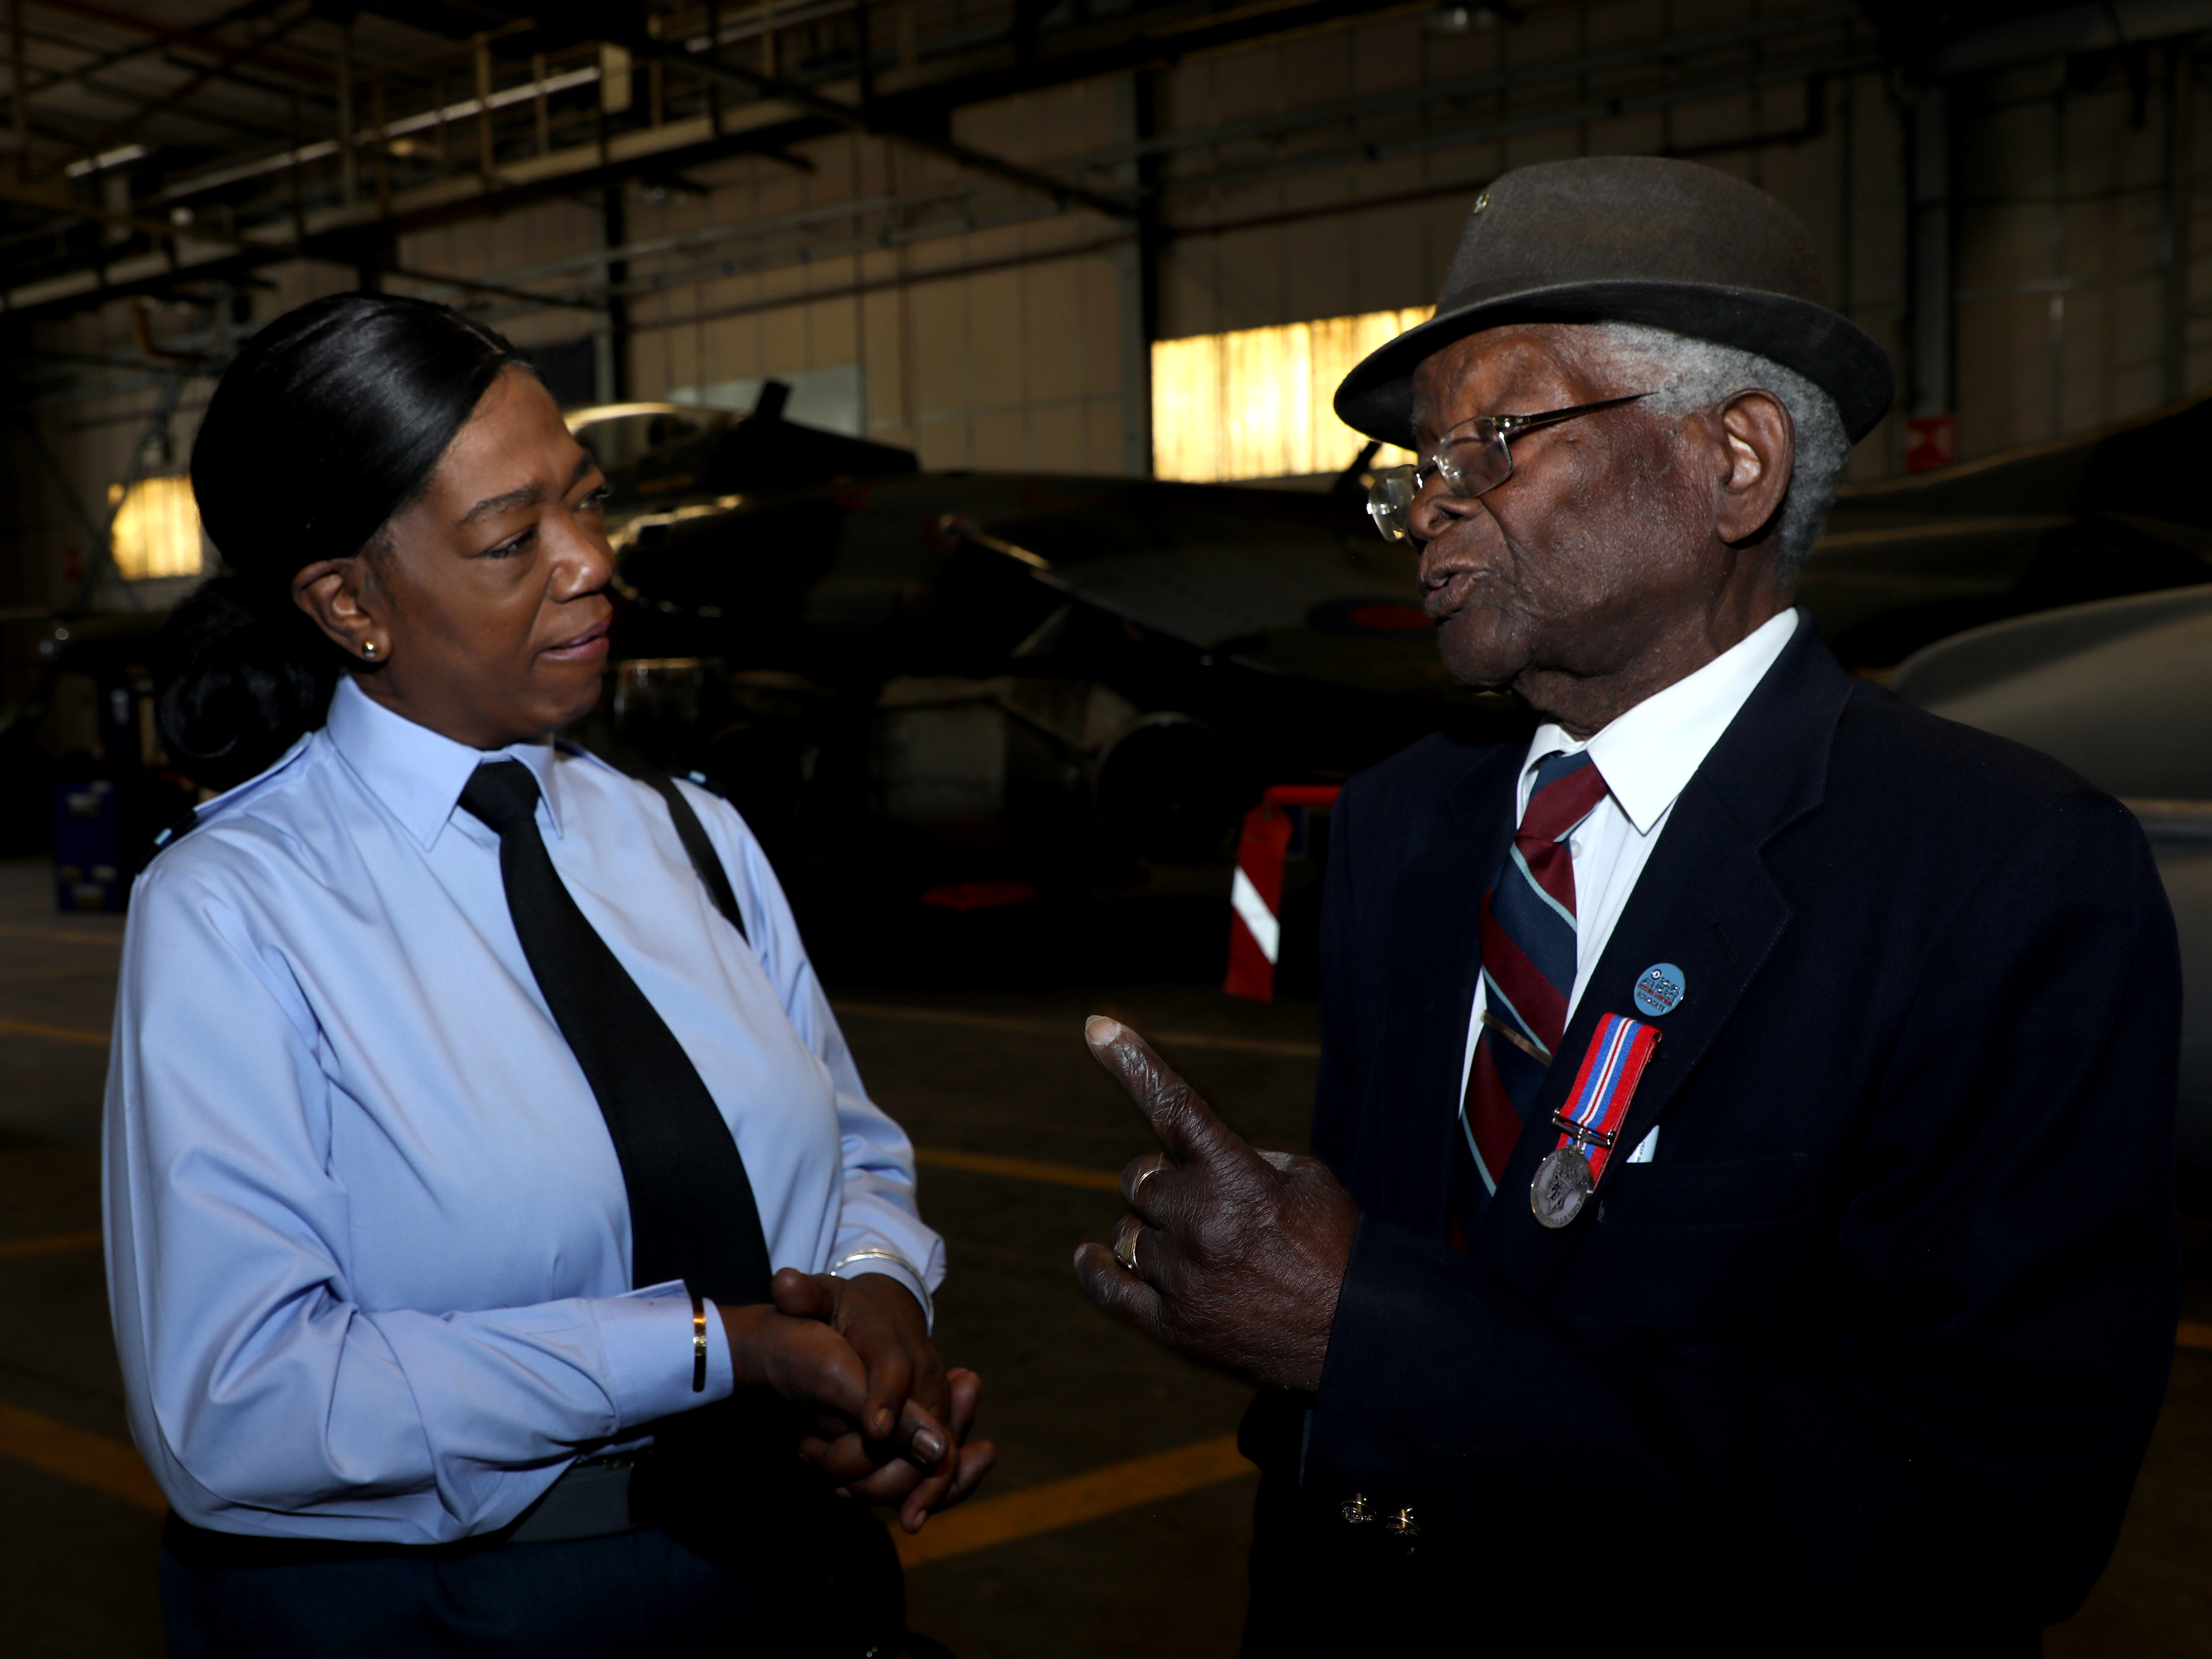 Image shows veteran and RAF aviator talking inside a hangar.